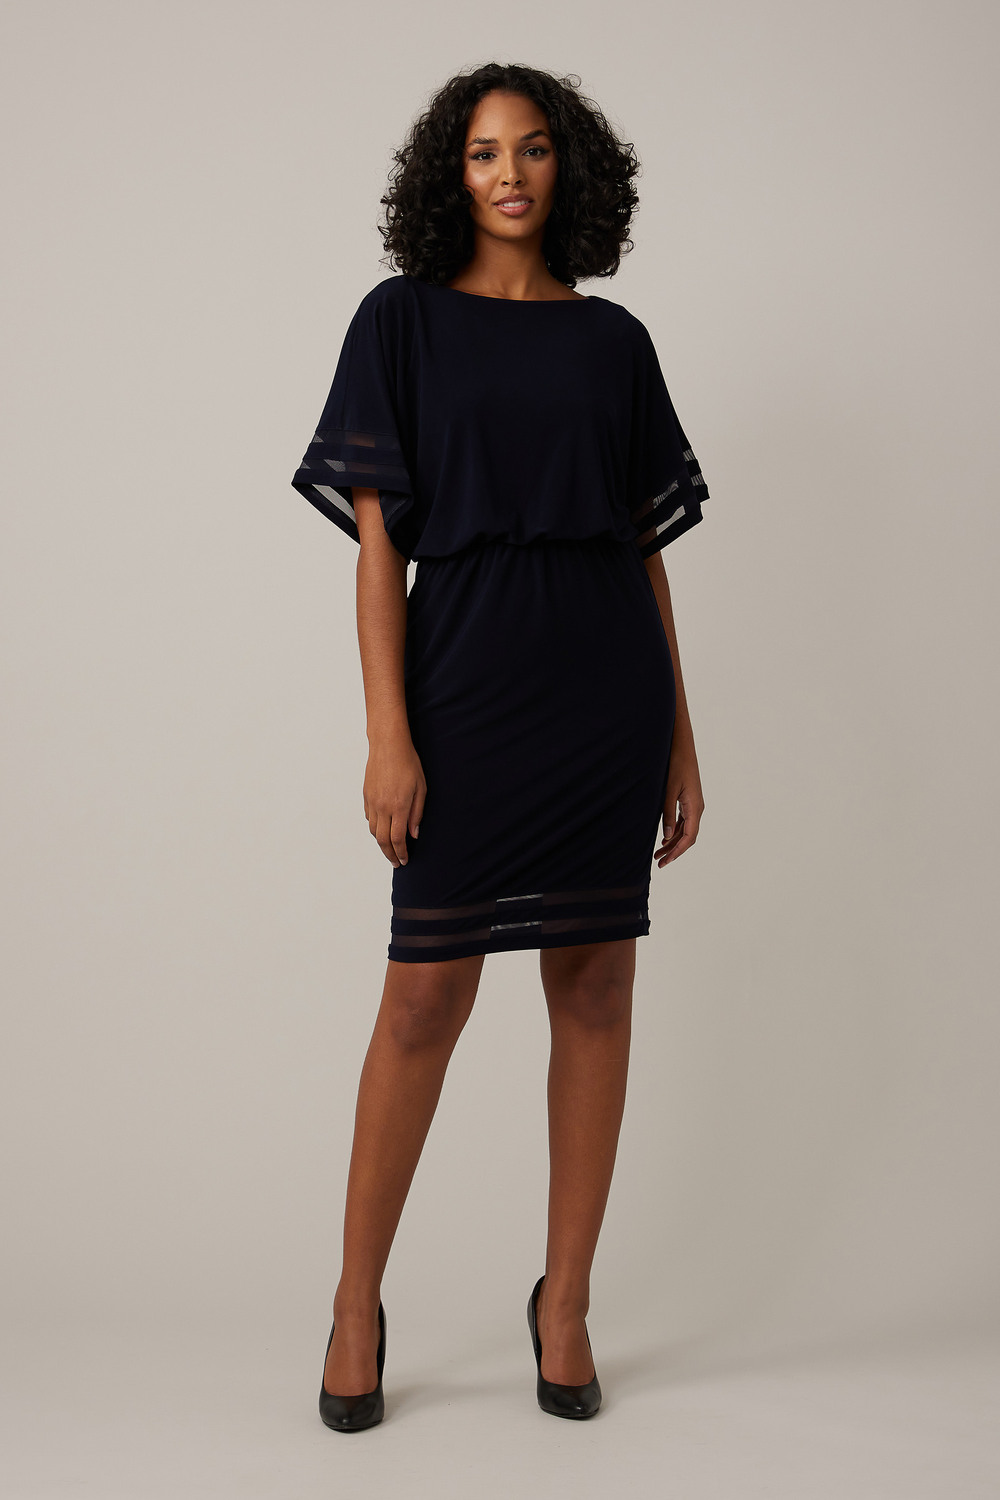 Joseph Ribkoff Sheer Sleeved Dress Style 221183. Midnight Blue